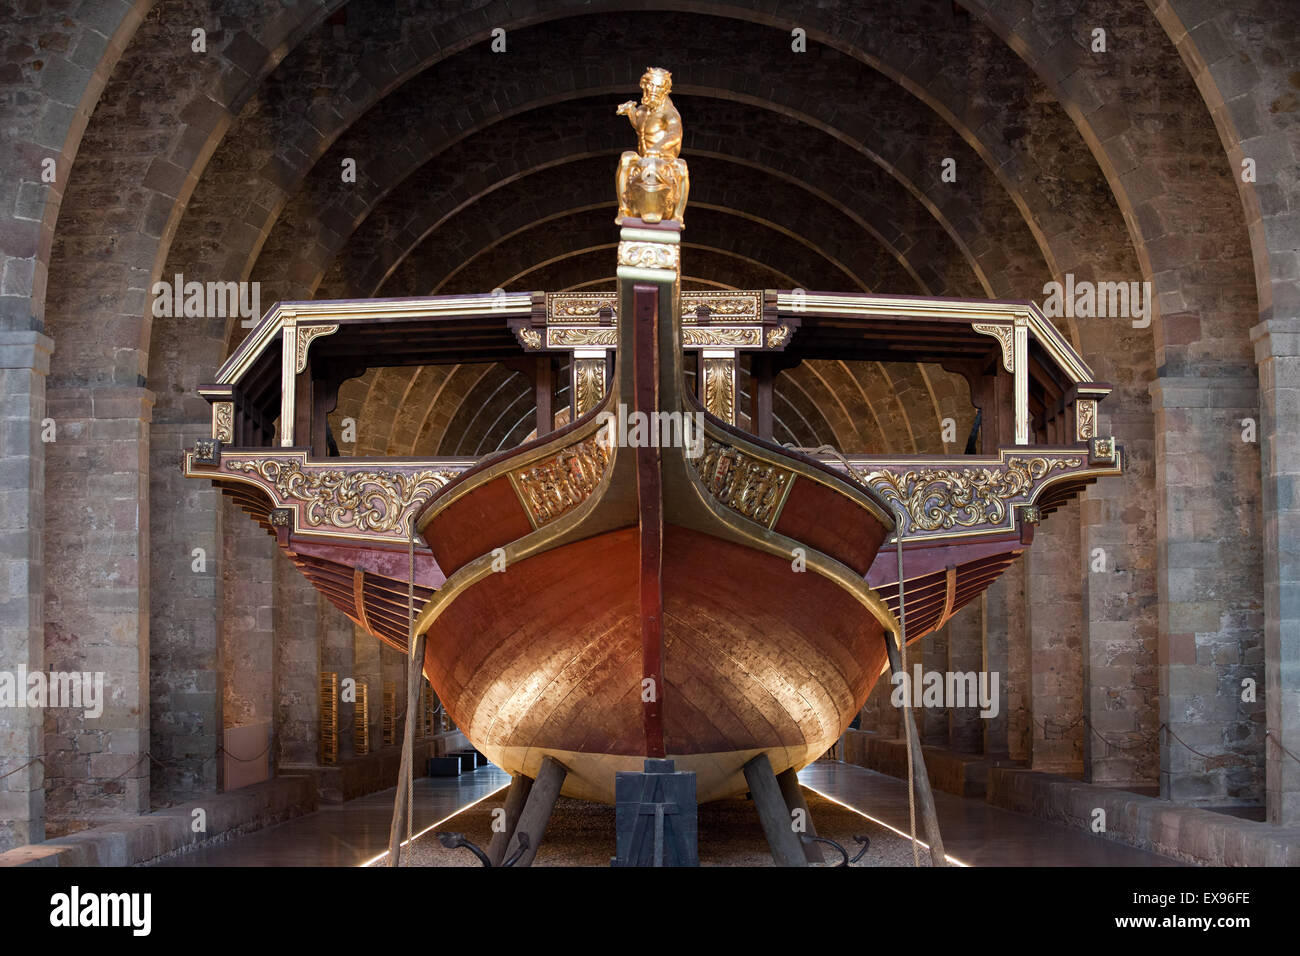 Barcelona Maritime Museum (Museu Maritim), royal galley of John of Austria, Catalonia, Spain Stock Photo